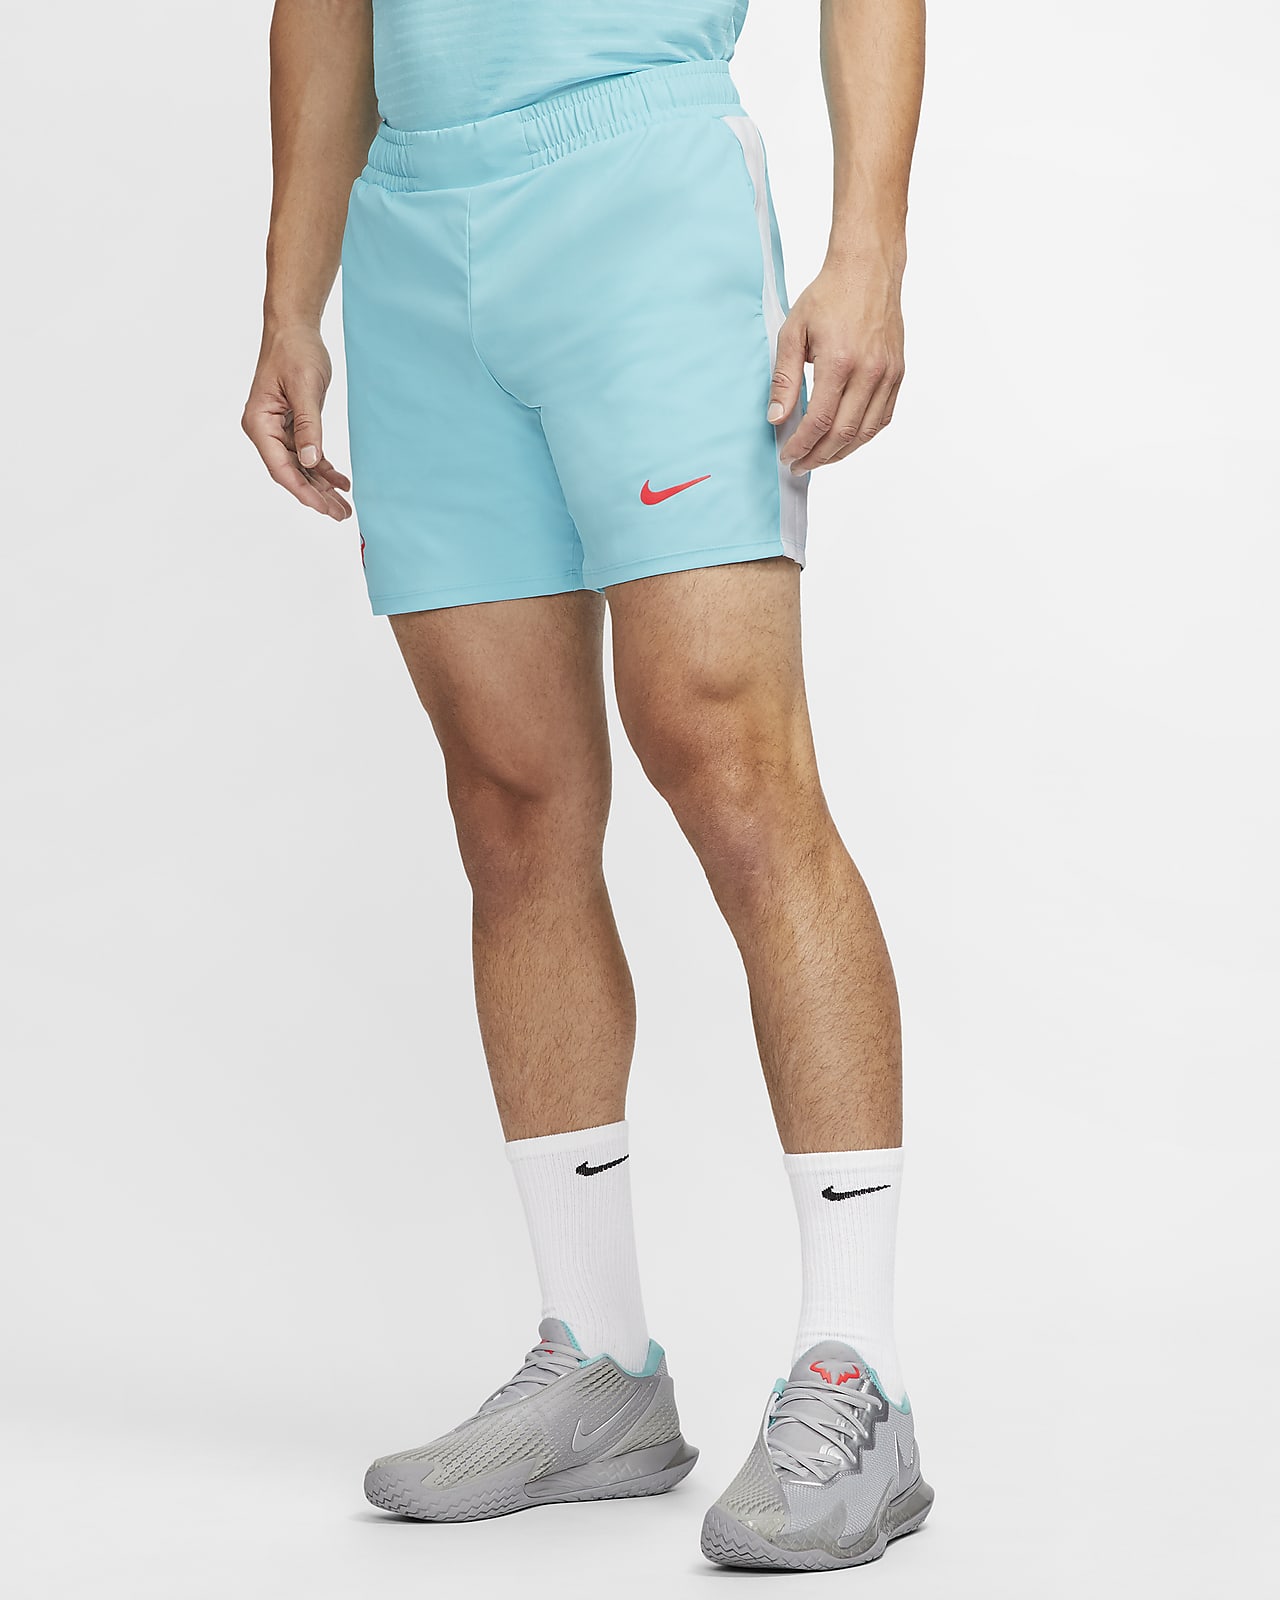 nike dri fit shorts tennis